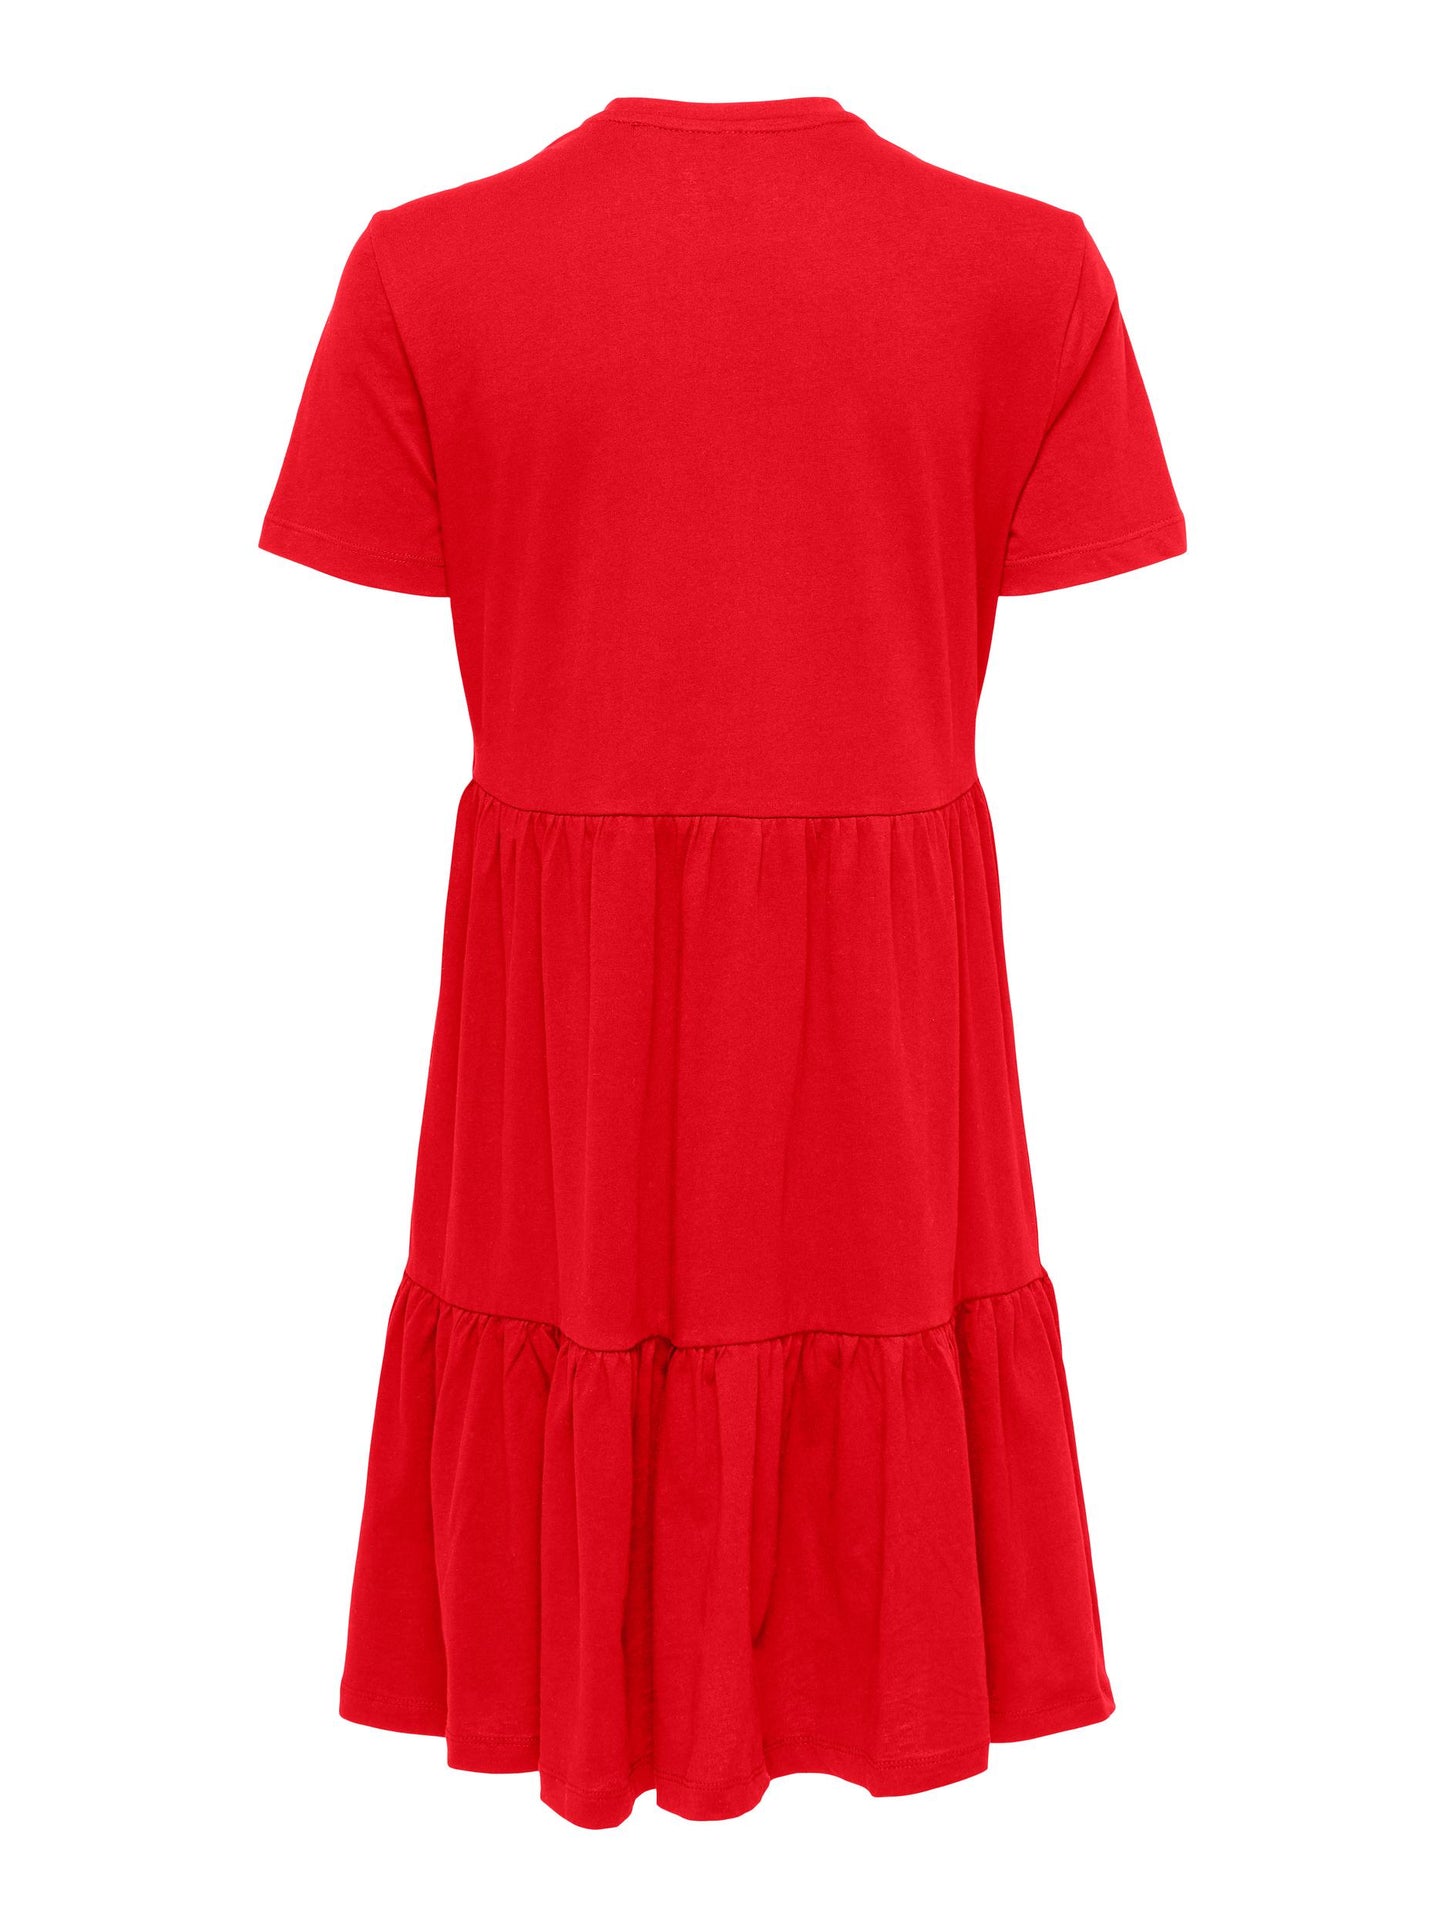 May Life Peplum Dress - High Risk Red